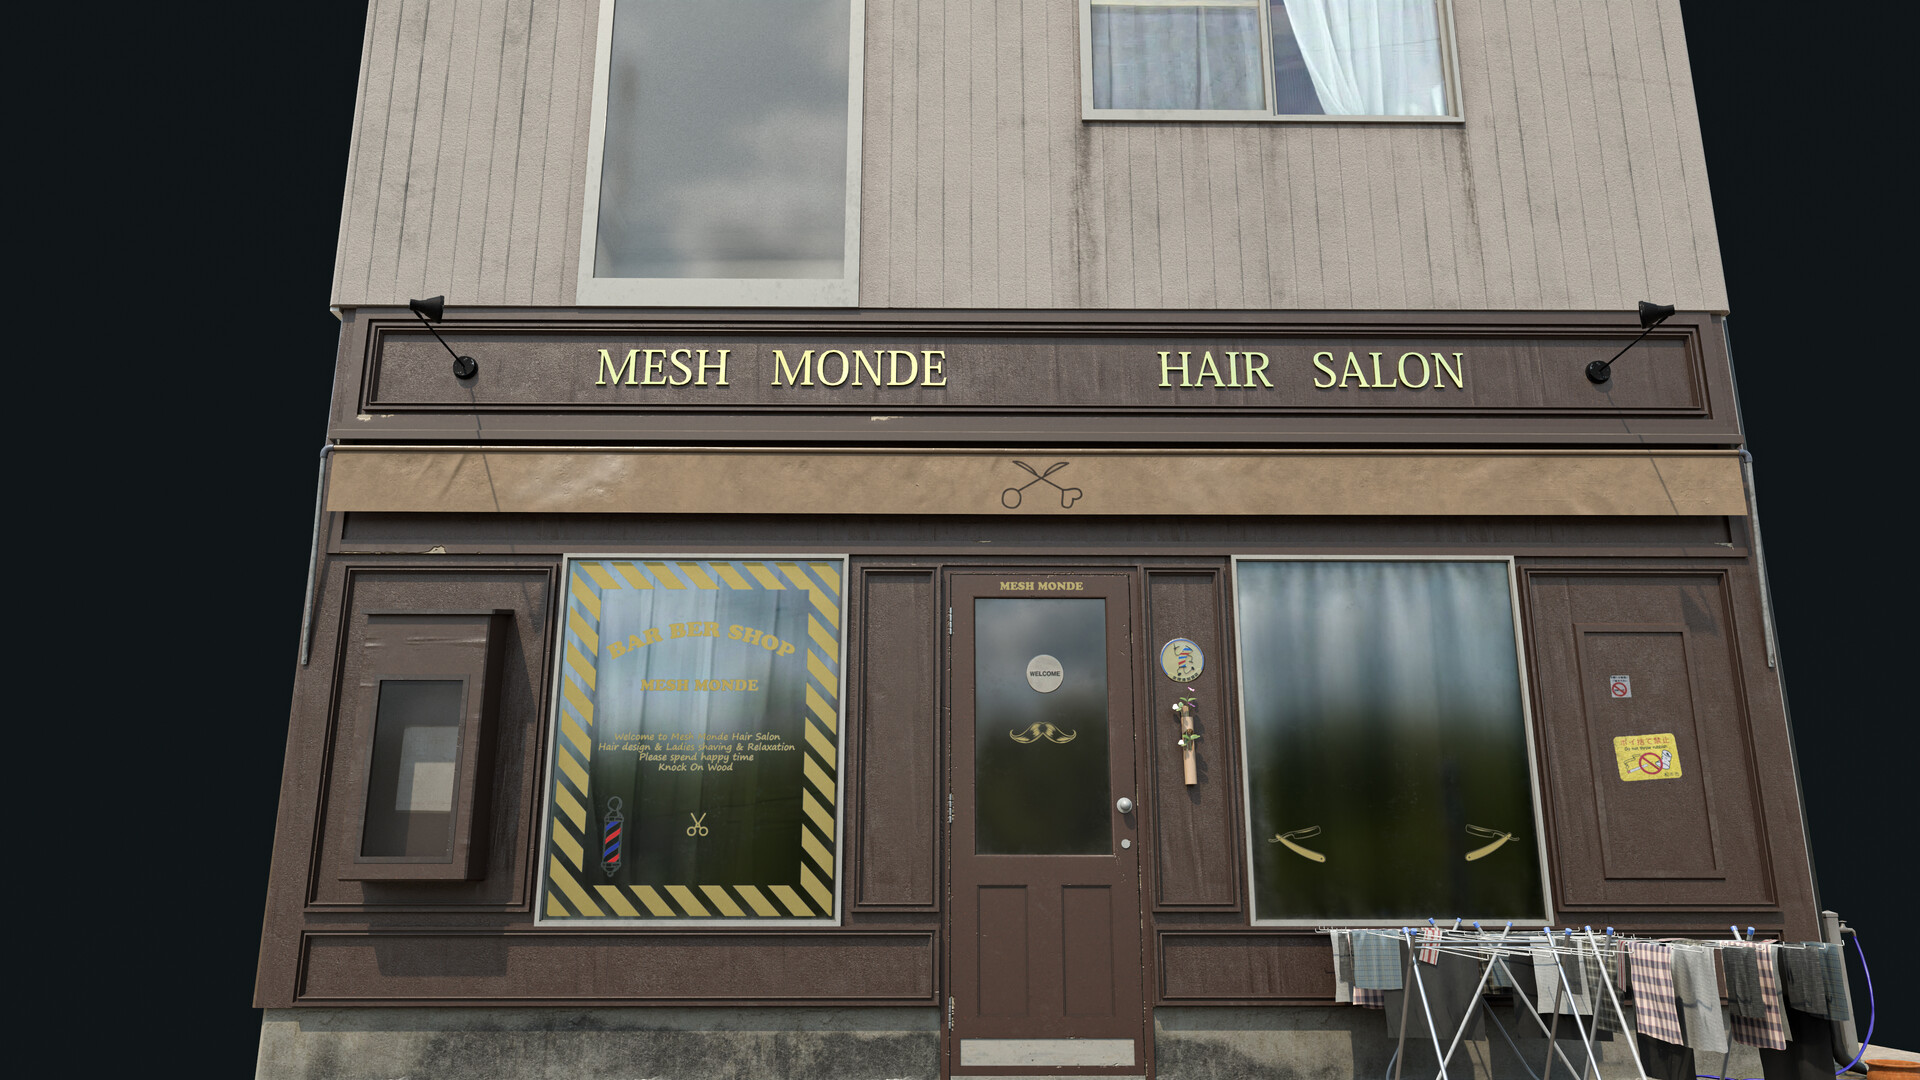 ArtStation - Barber Shop Hair Salon Game